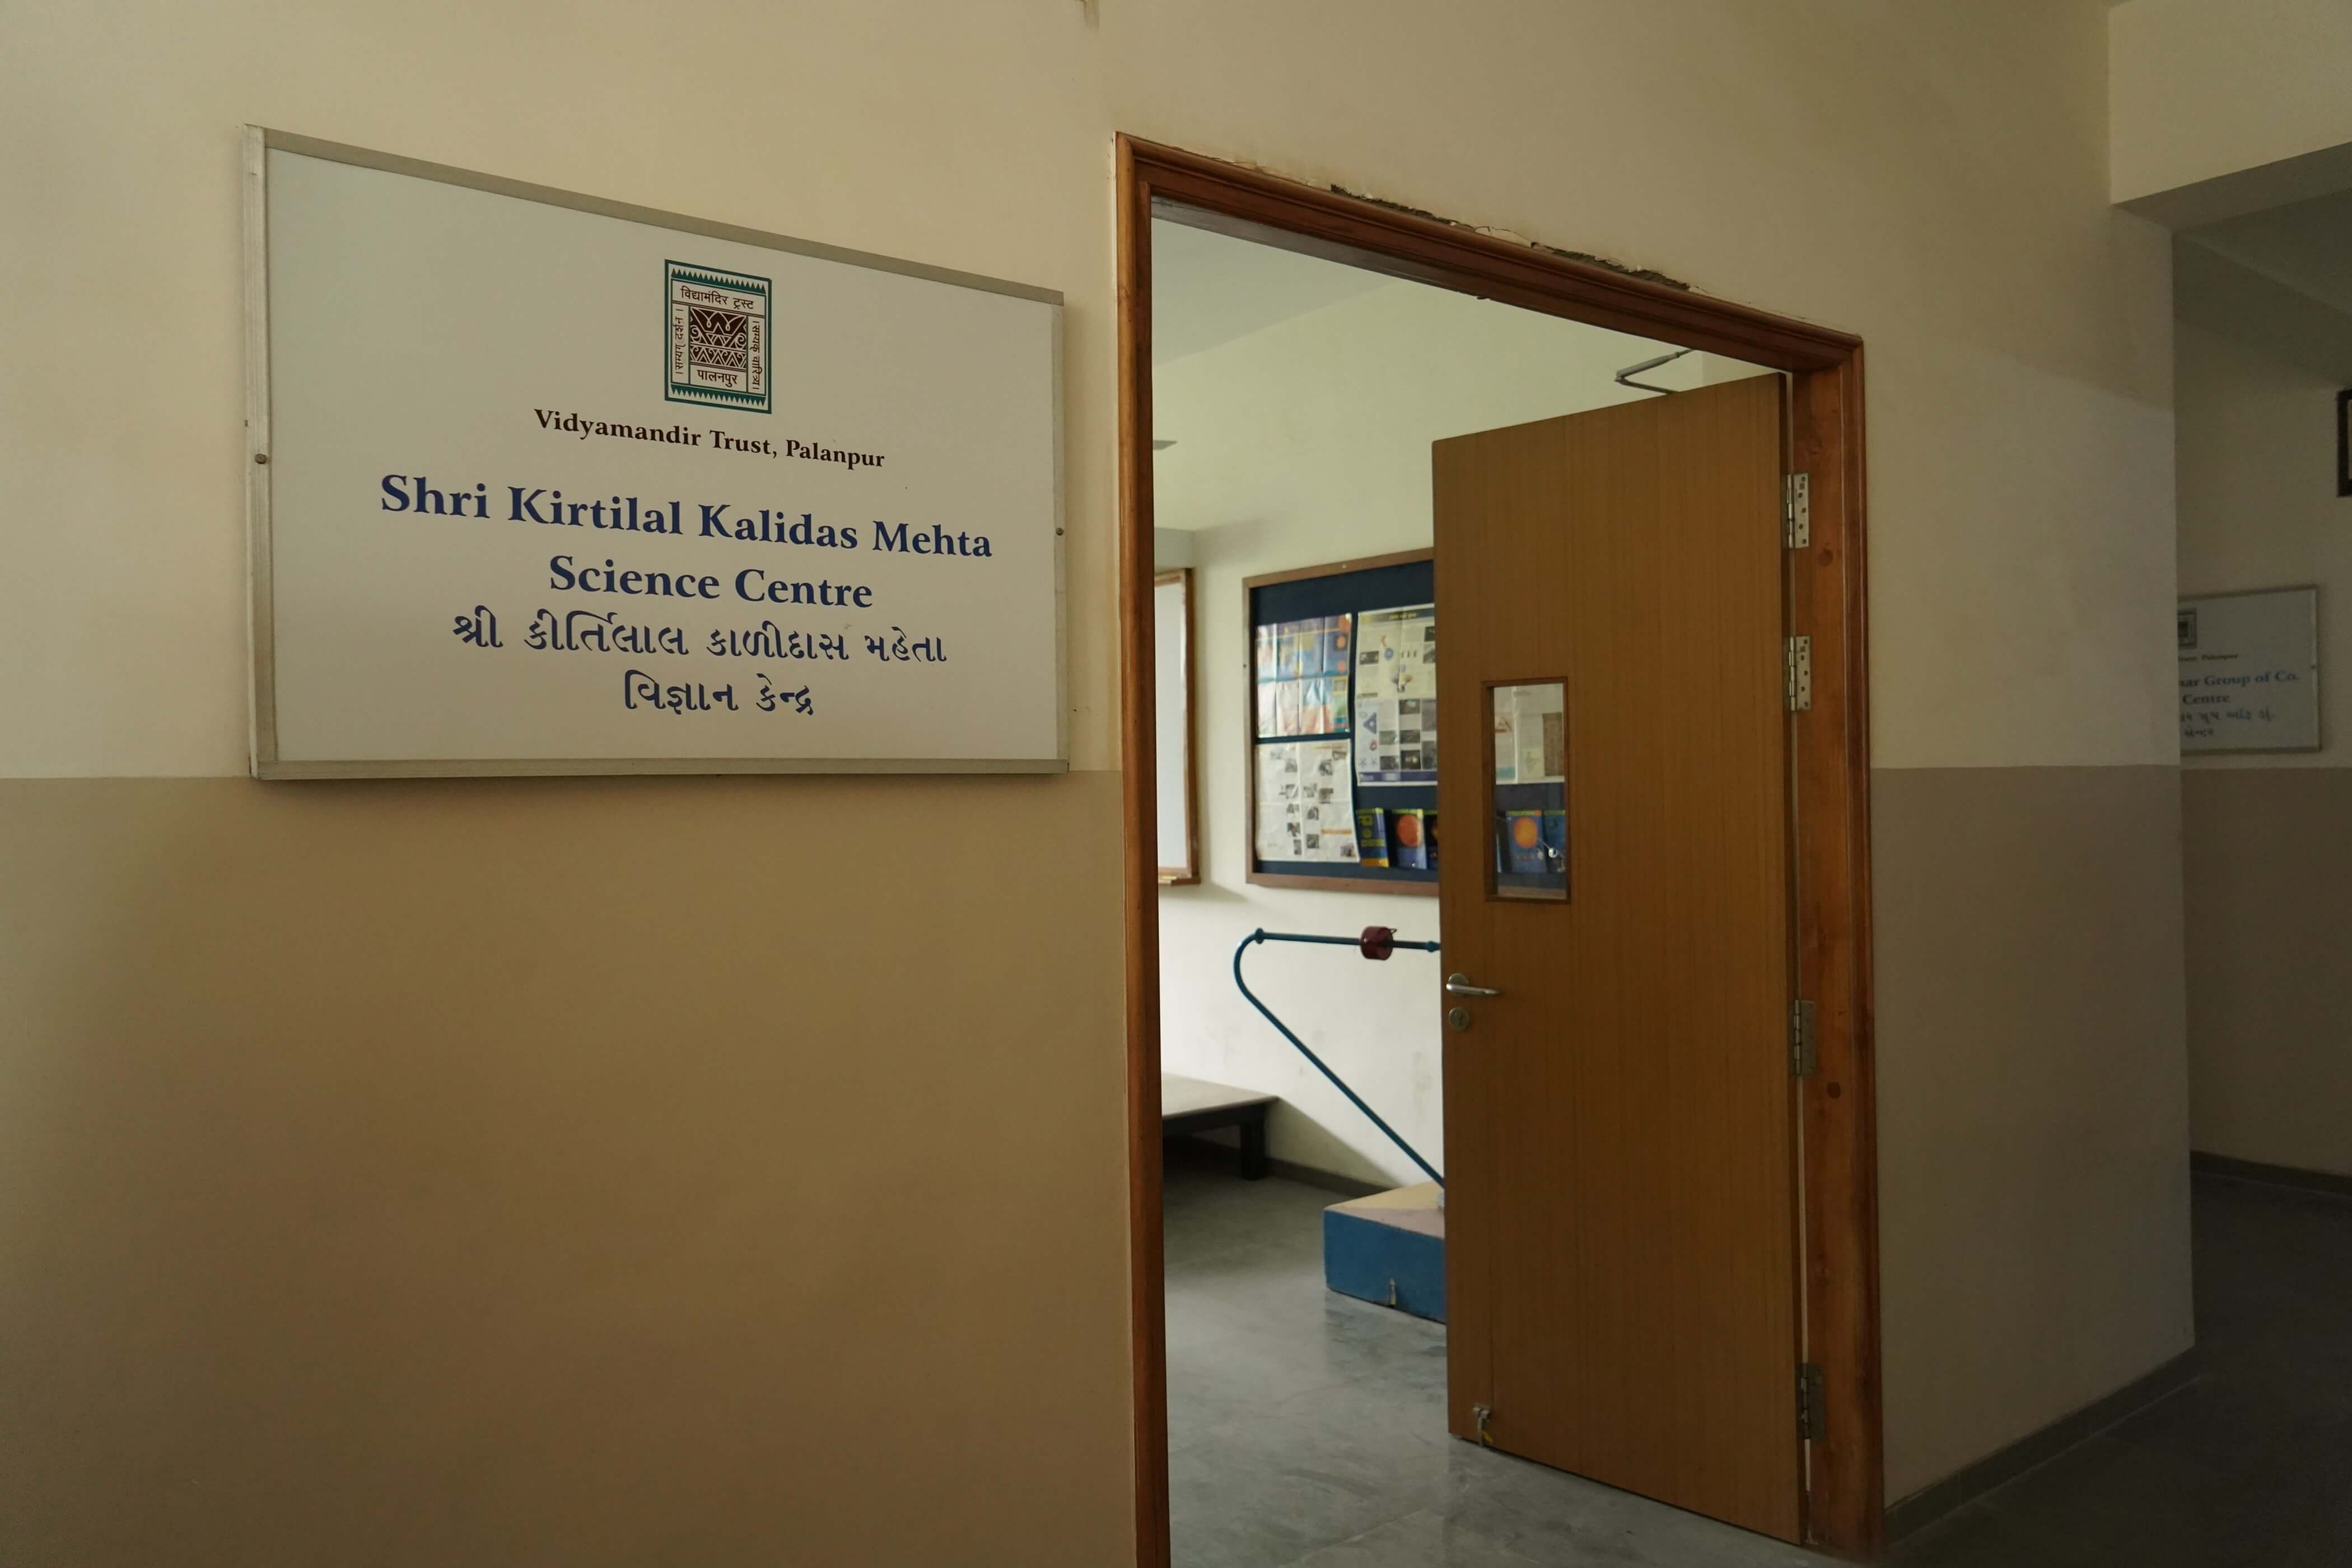 Shri Kirtilal Kalidas Mehta Science Centre - Building Photo